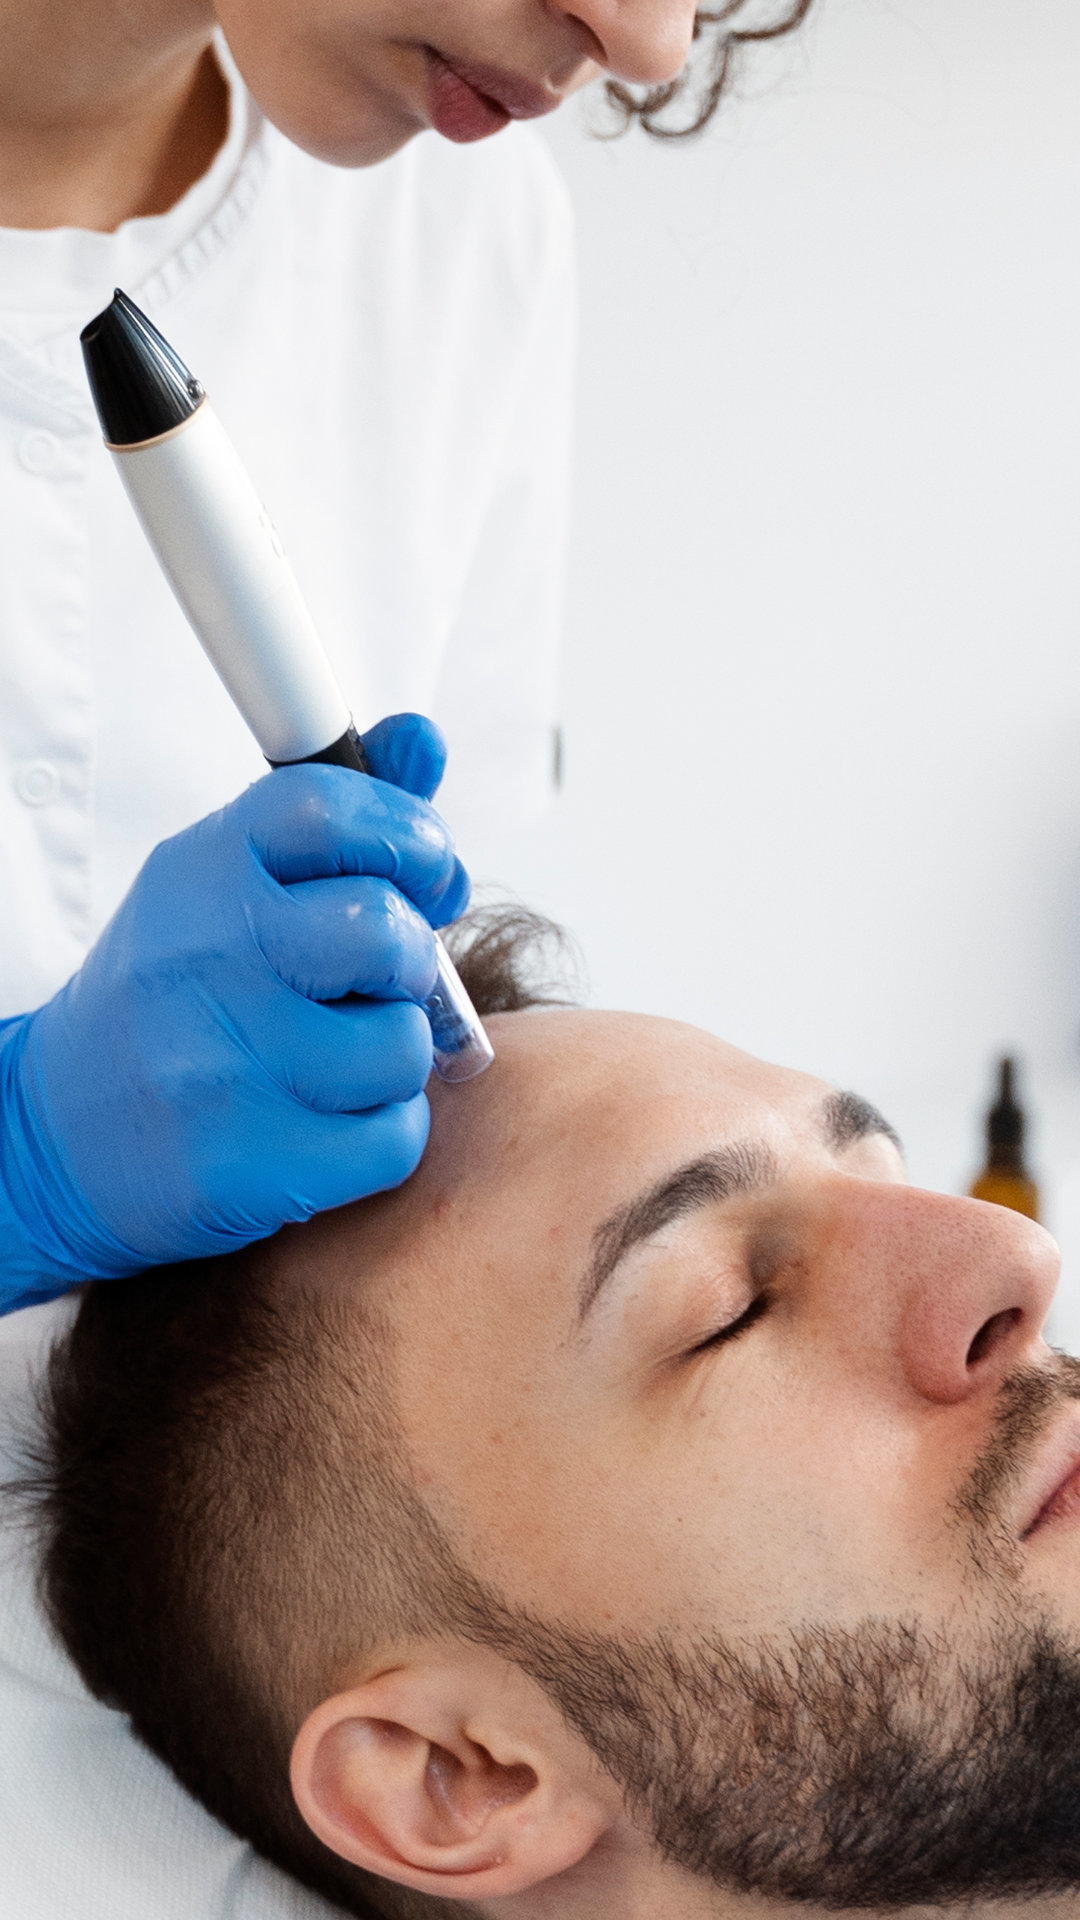 Deep treatments: Cosmelan® depigmentation, Derma microneedling, Micro genius, OxyGeneo Facial, Stretch–mark treatments